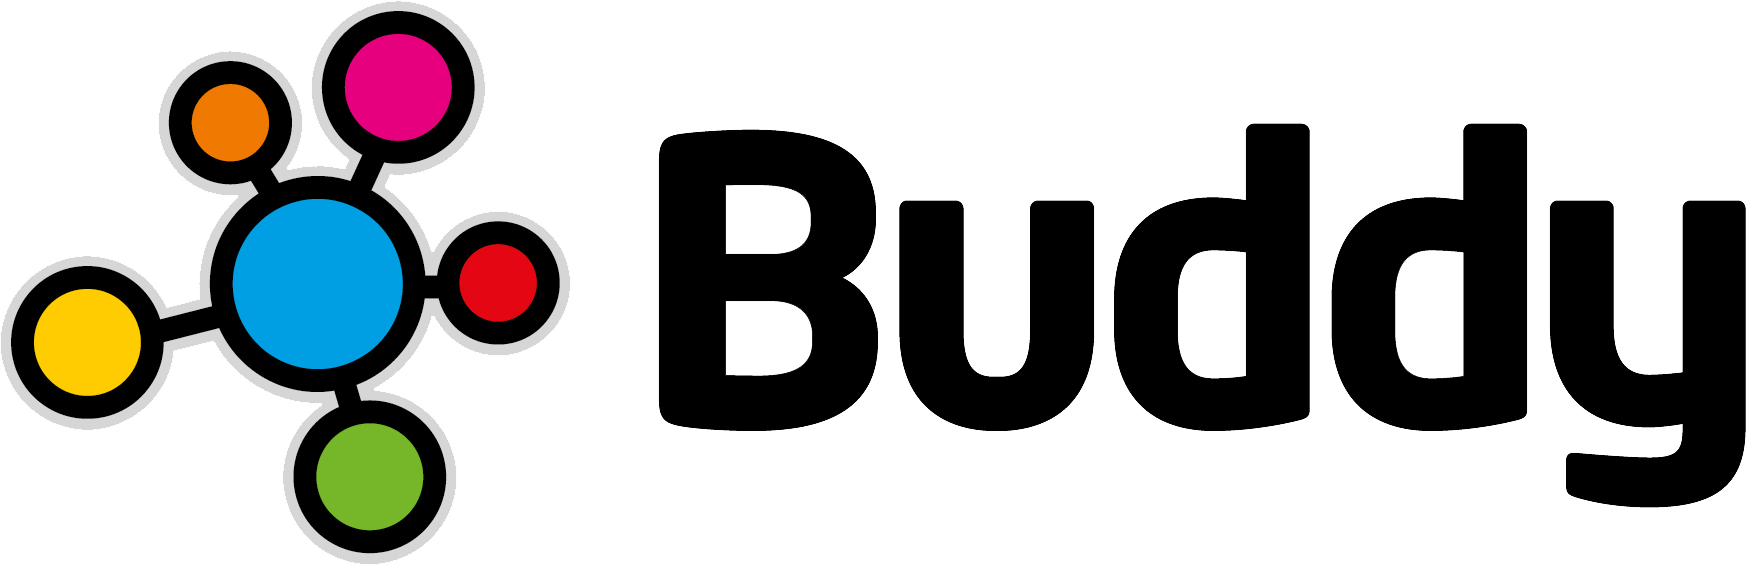 Buddy Technologies Ltd Logo